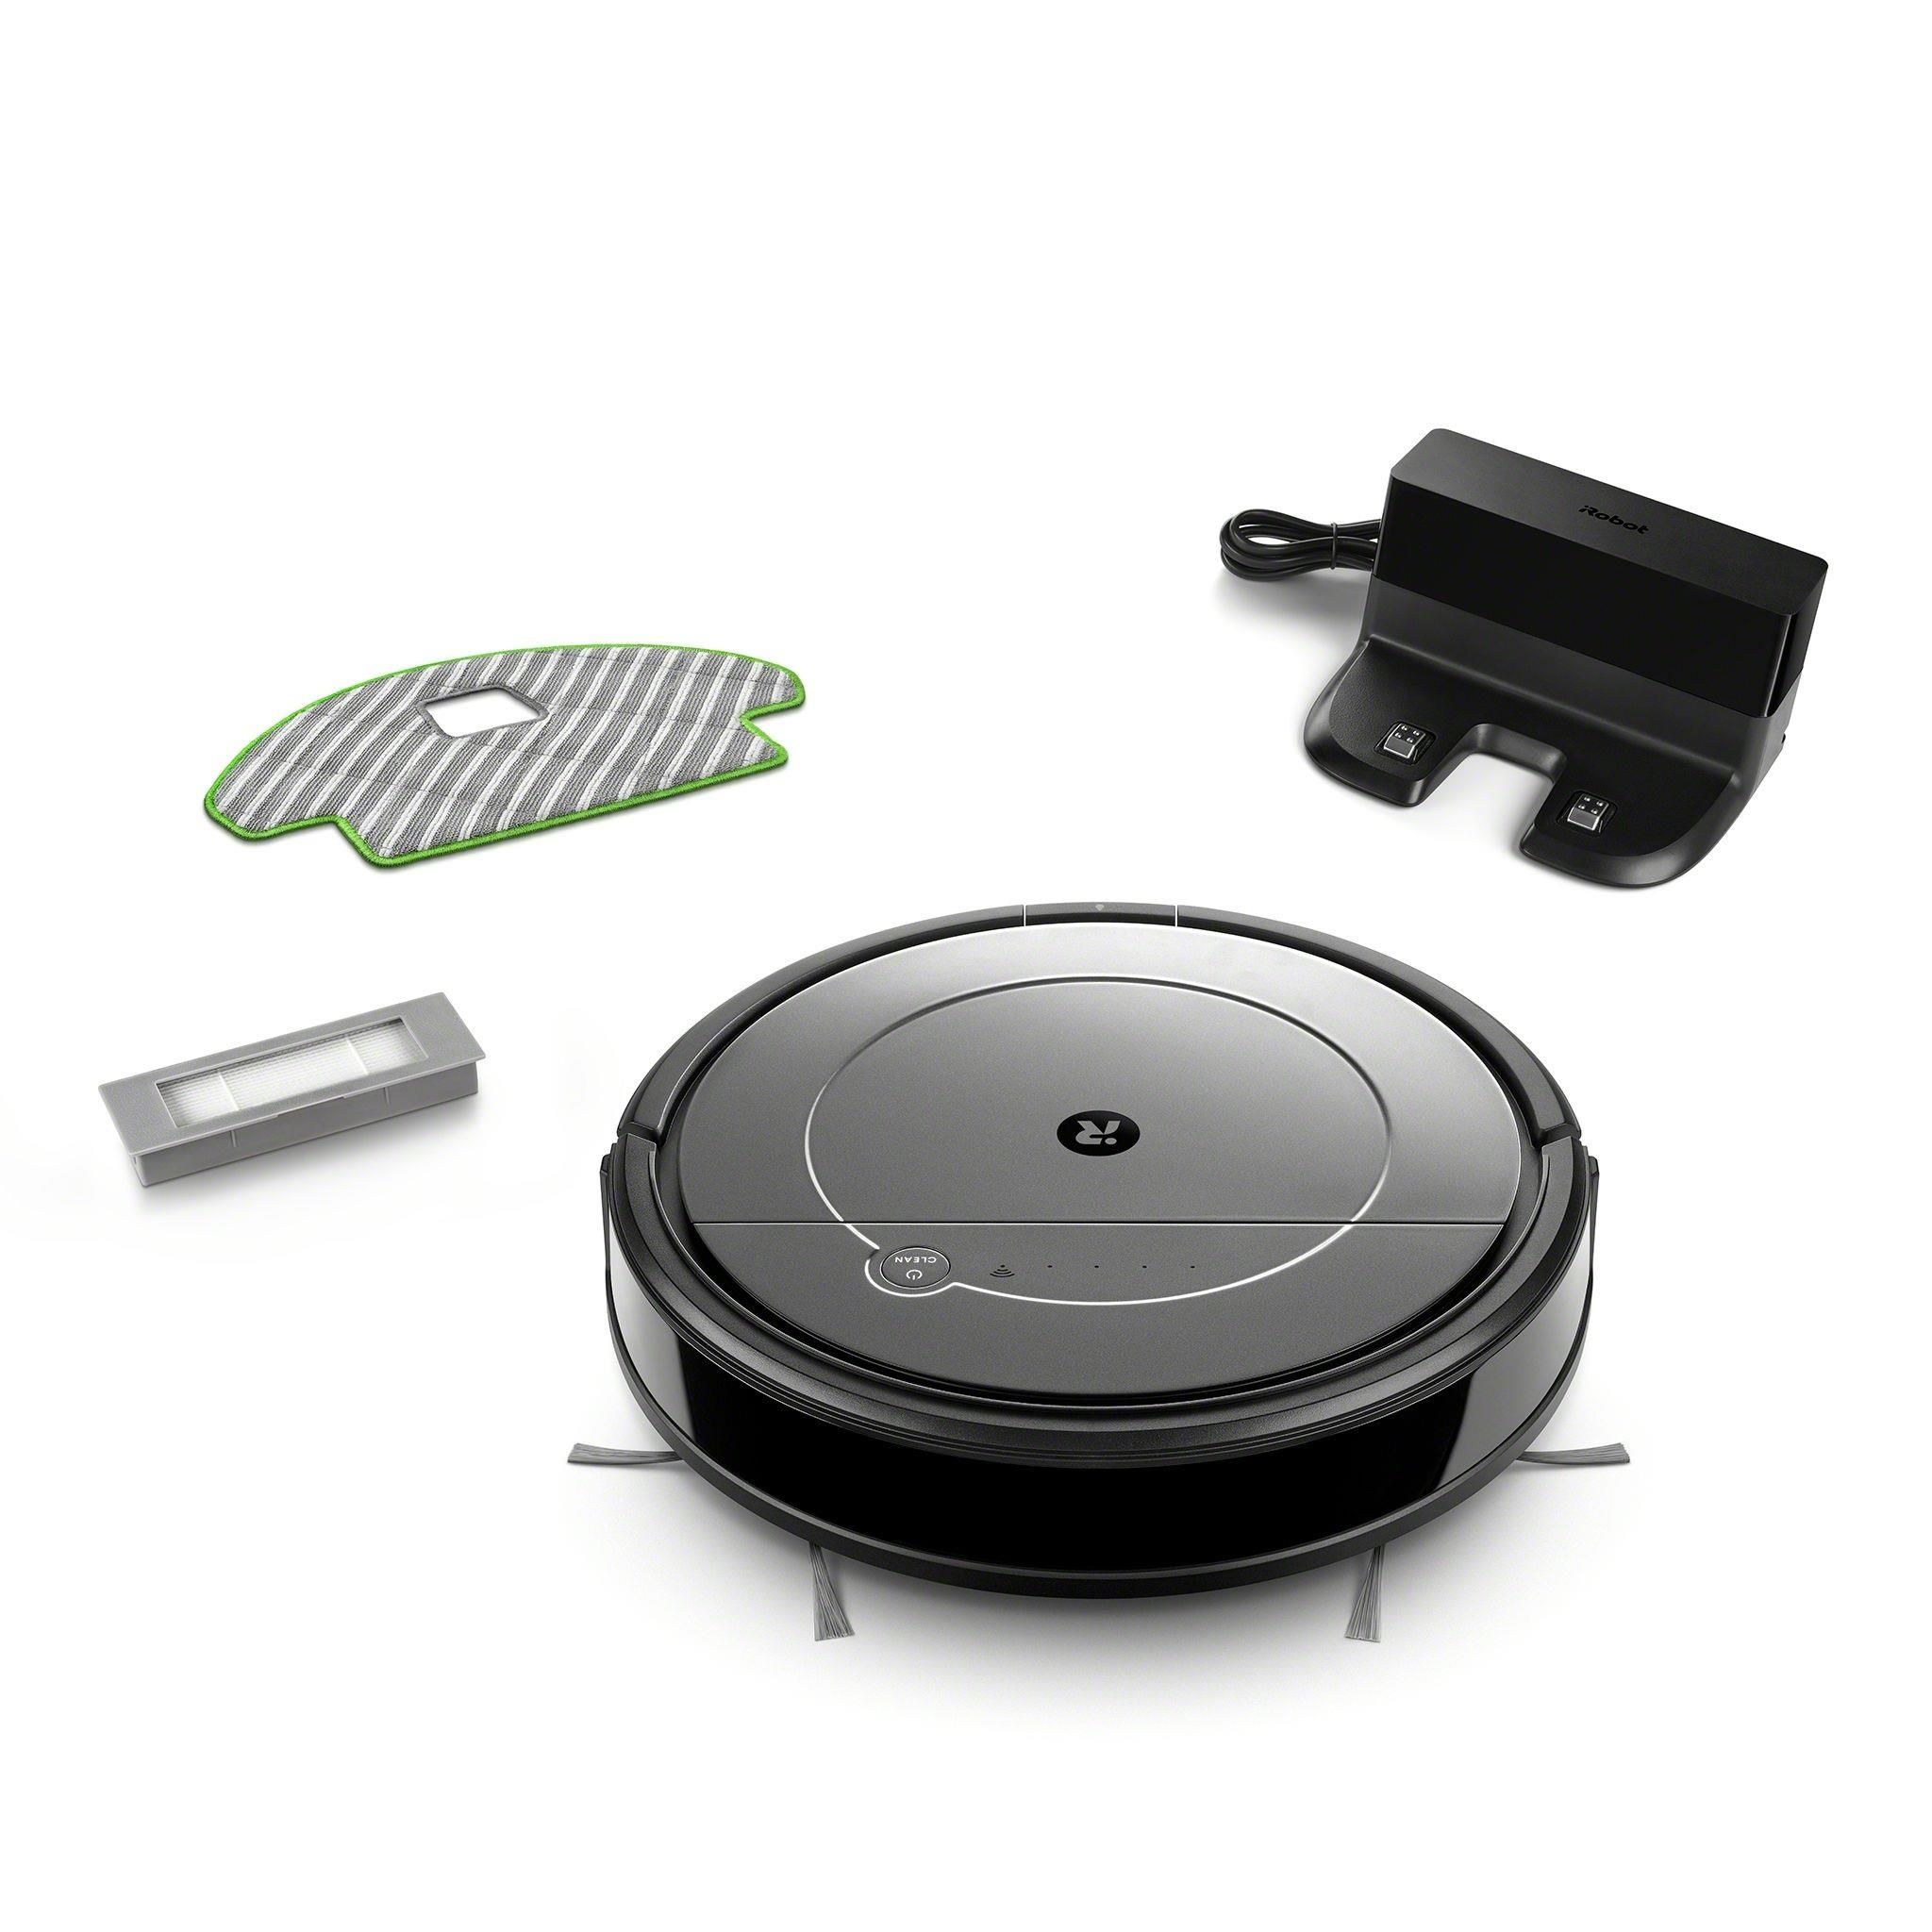 Filtro compatibile robot aspirapolvere Filter Plus Irobot Roomba, offerta  vendita online